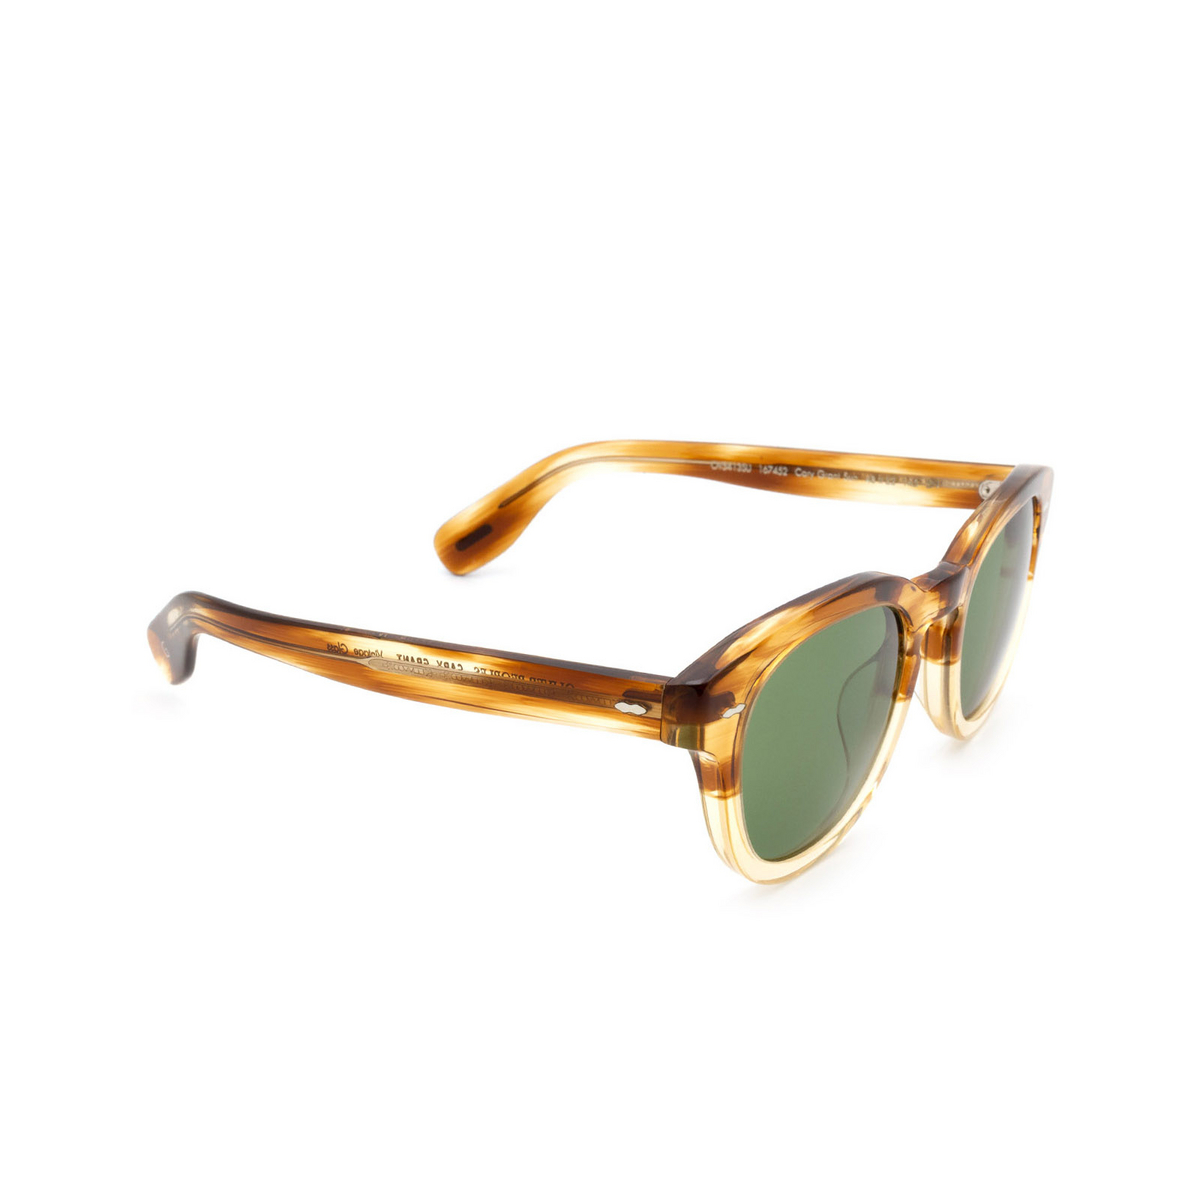 Oliver Peoples CARY GRANT Sunglasses 167452 Honey Vsb - three-quarters view